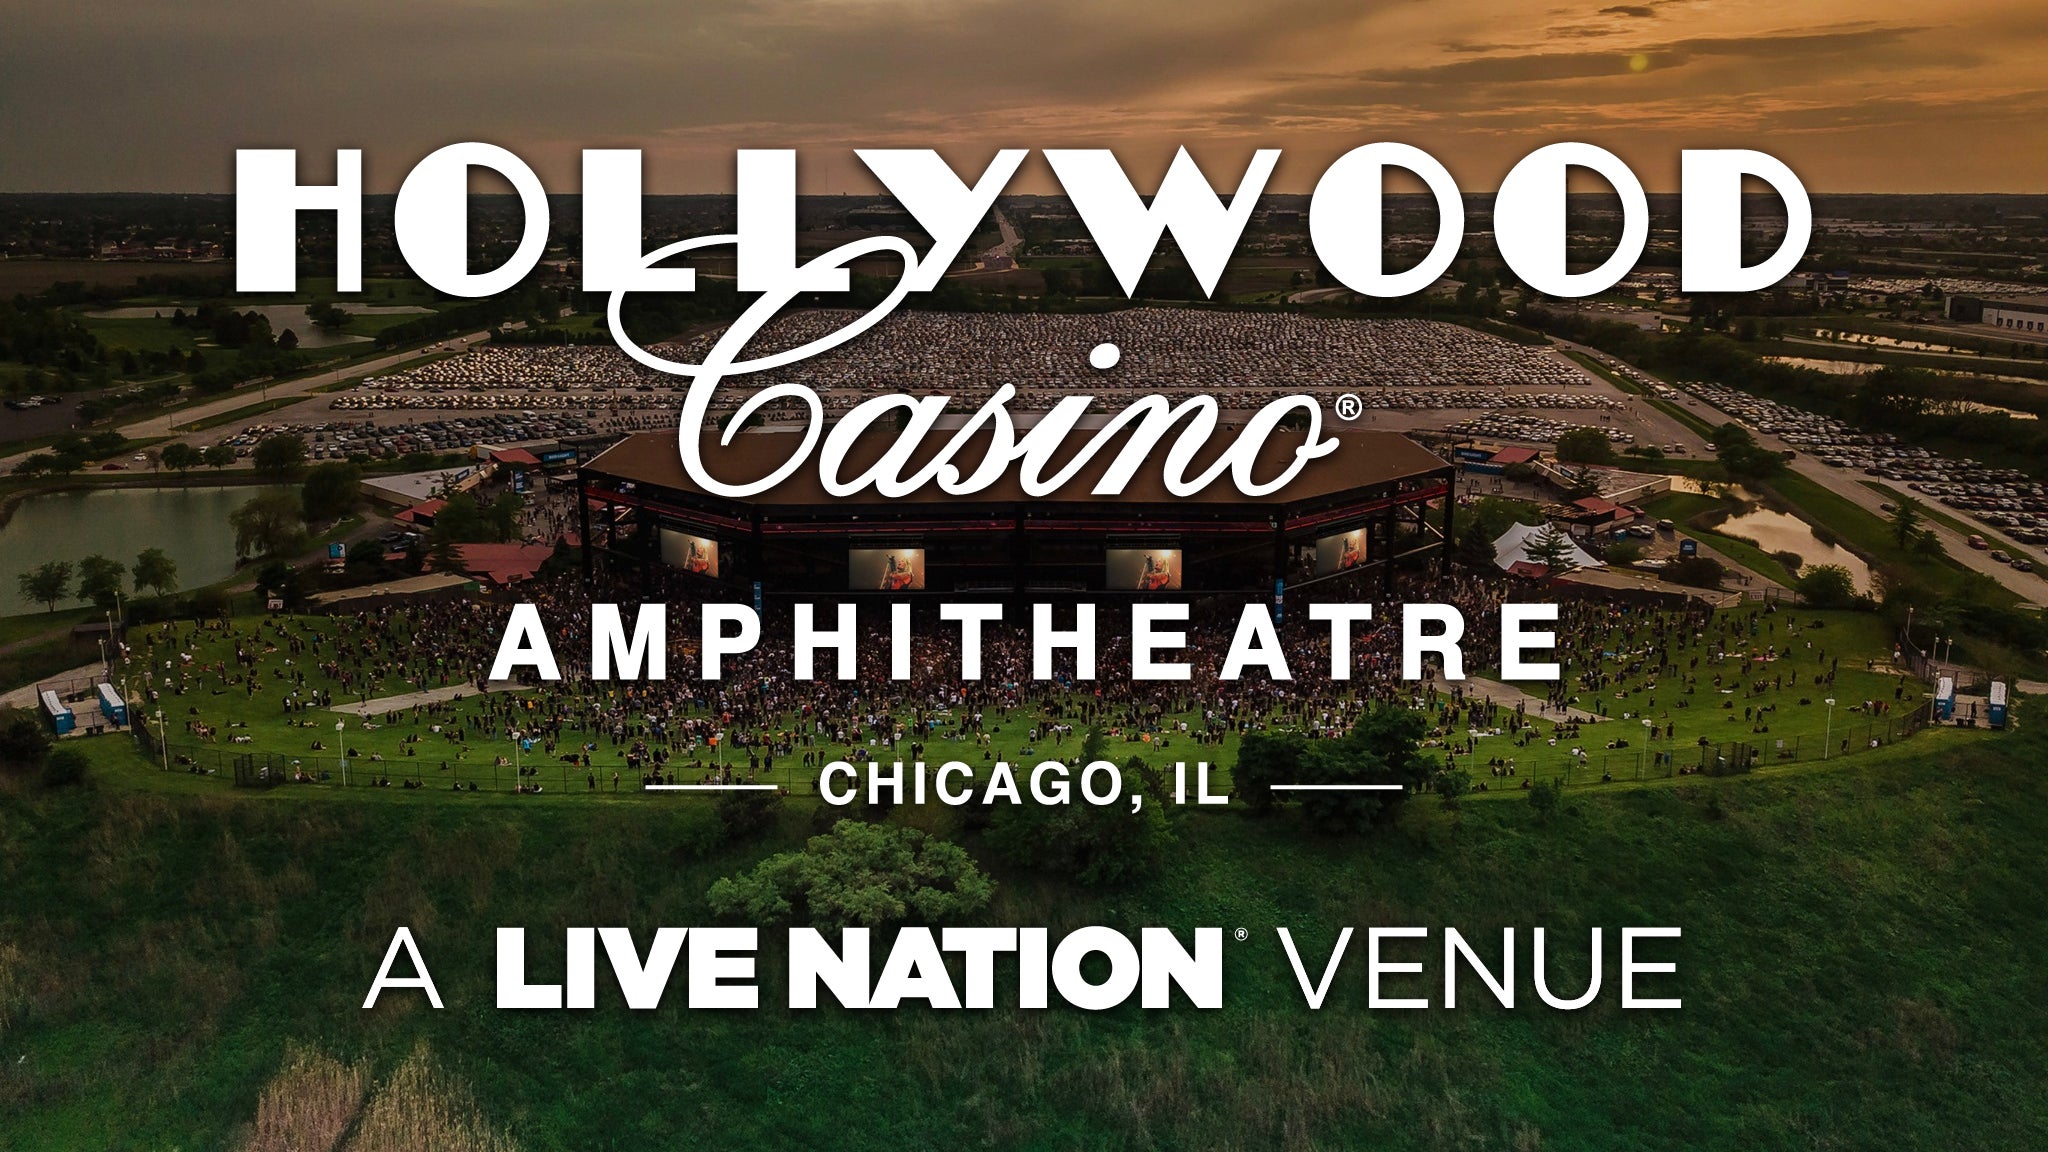 hollywood casino amphitheatre chicago iltinley park